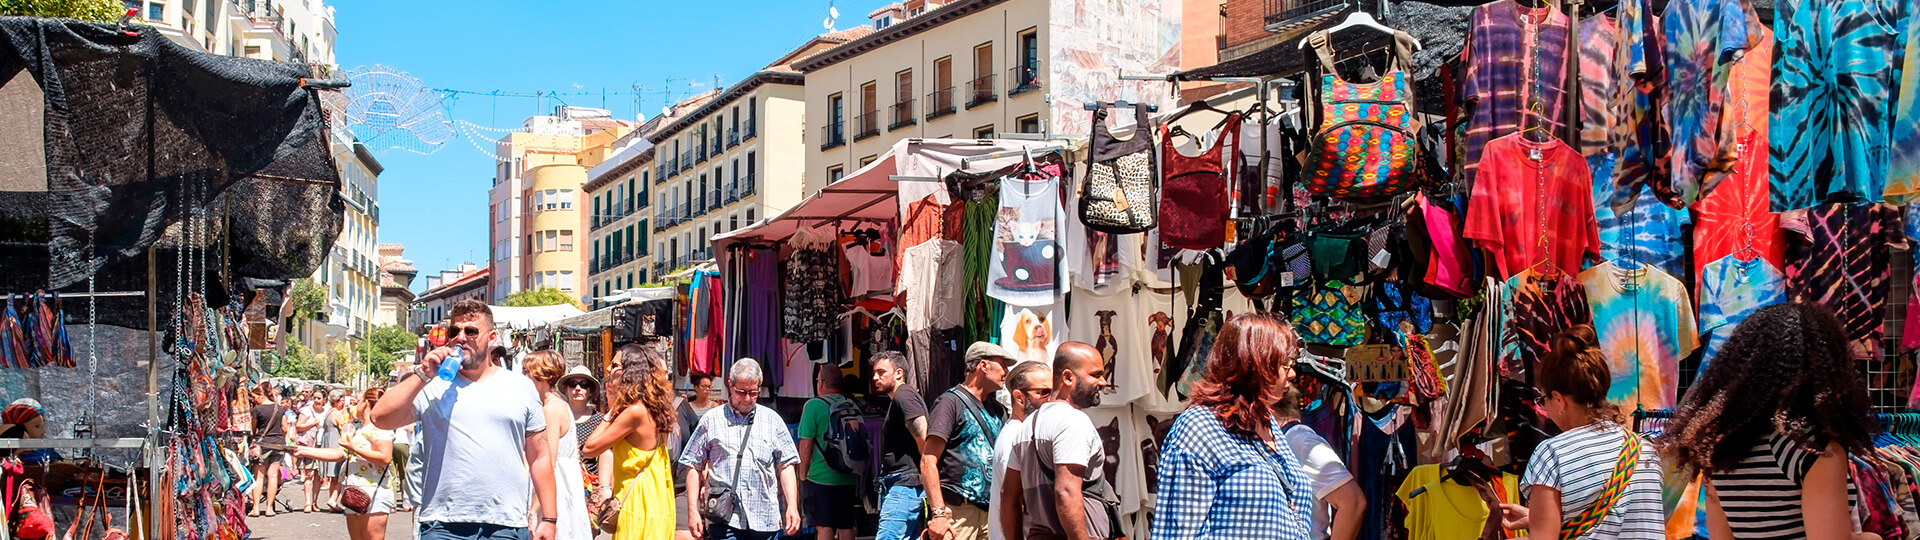 El Rastro street market in Madrid